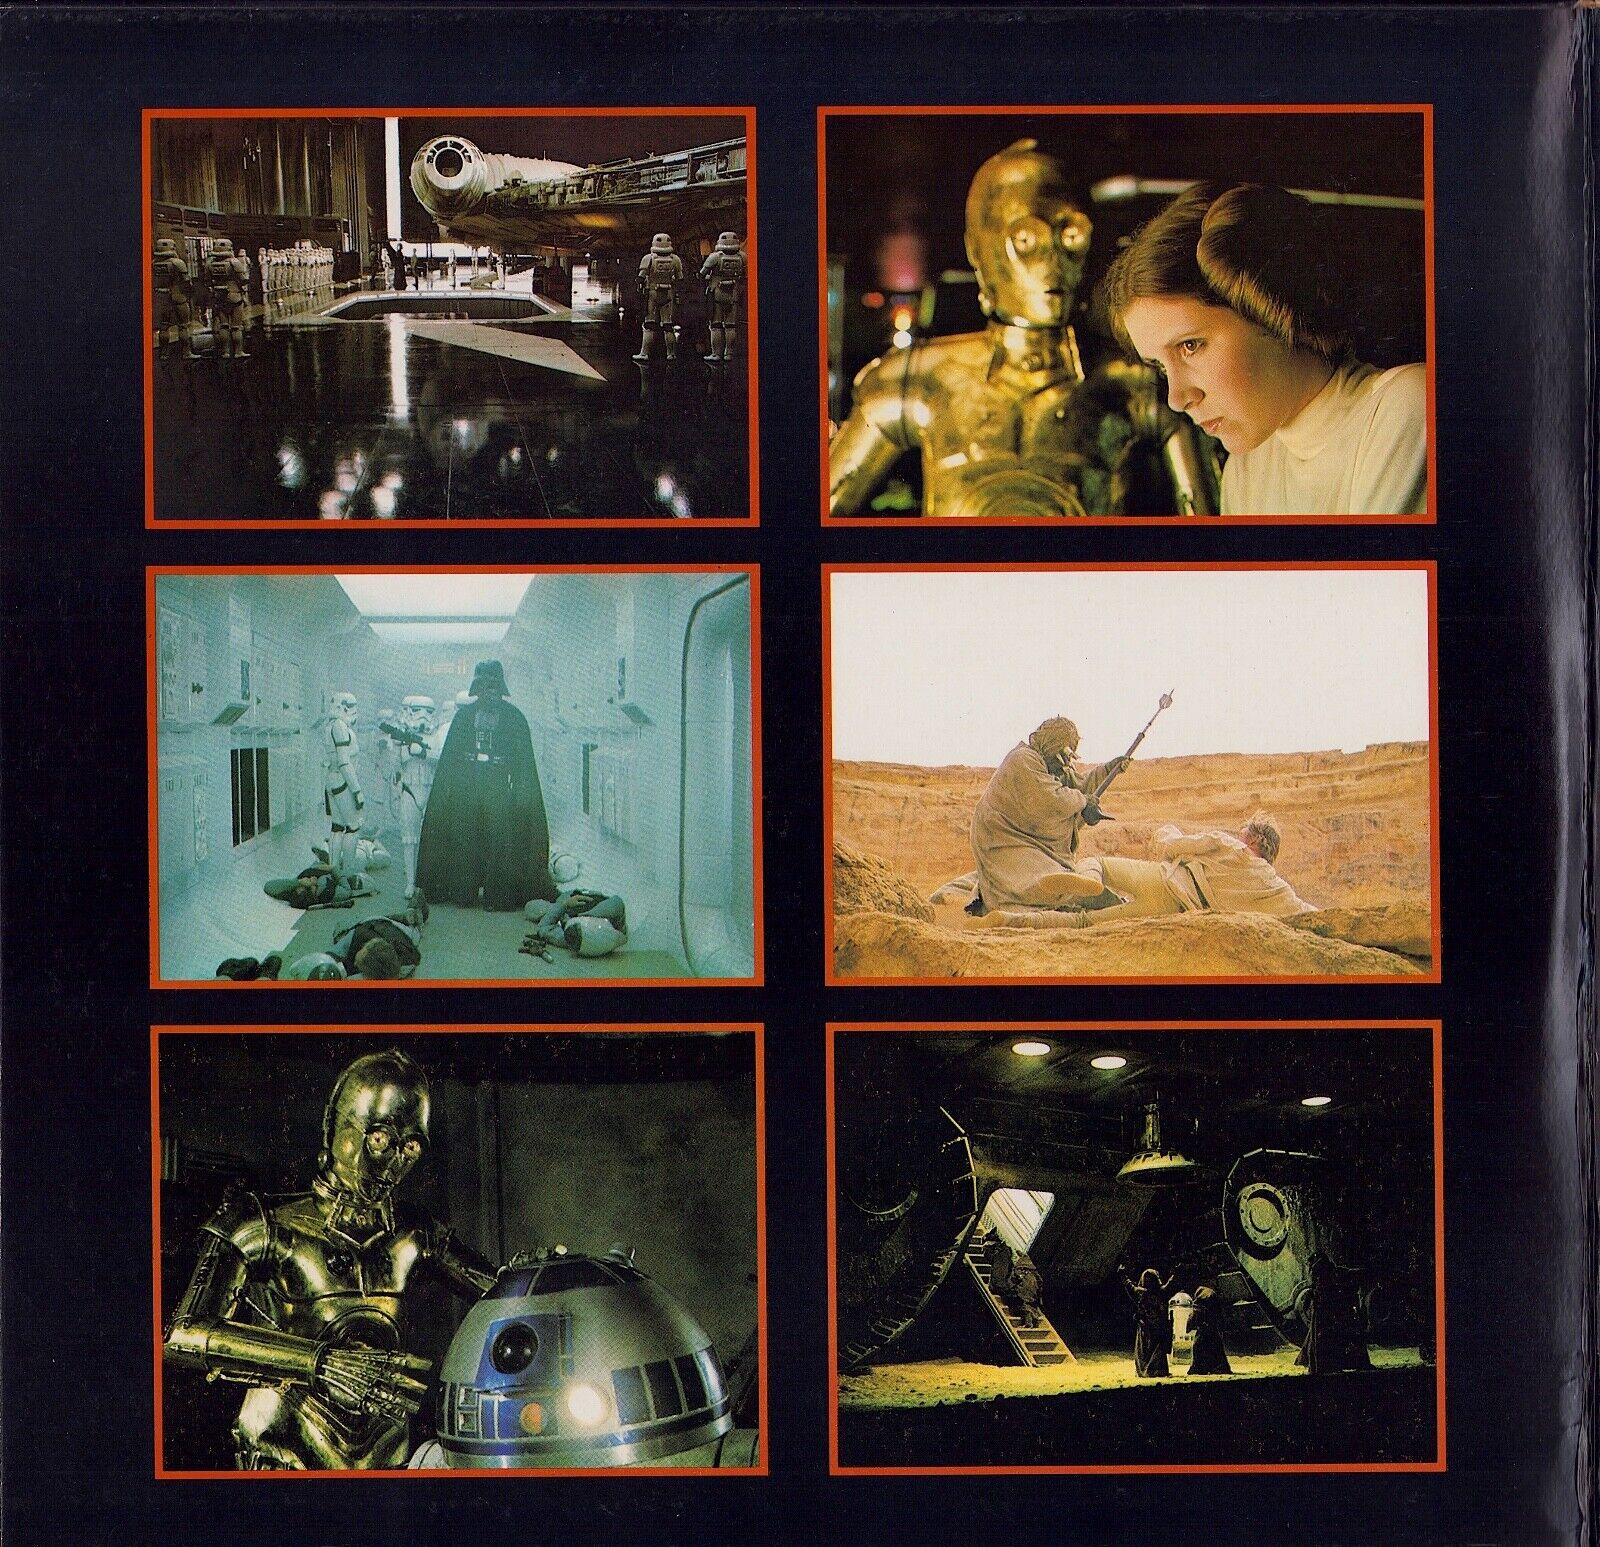 John Williams - The London Symphony Orchestra ‎- "Star Wars" Vinyl 2LP + Poster